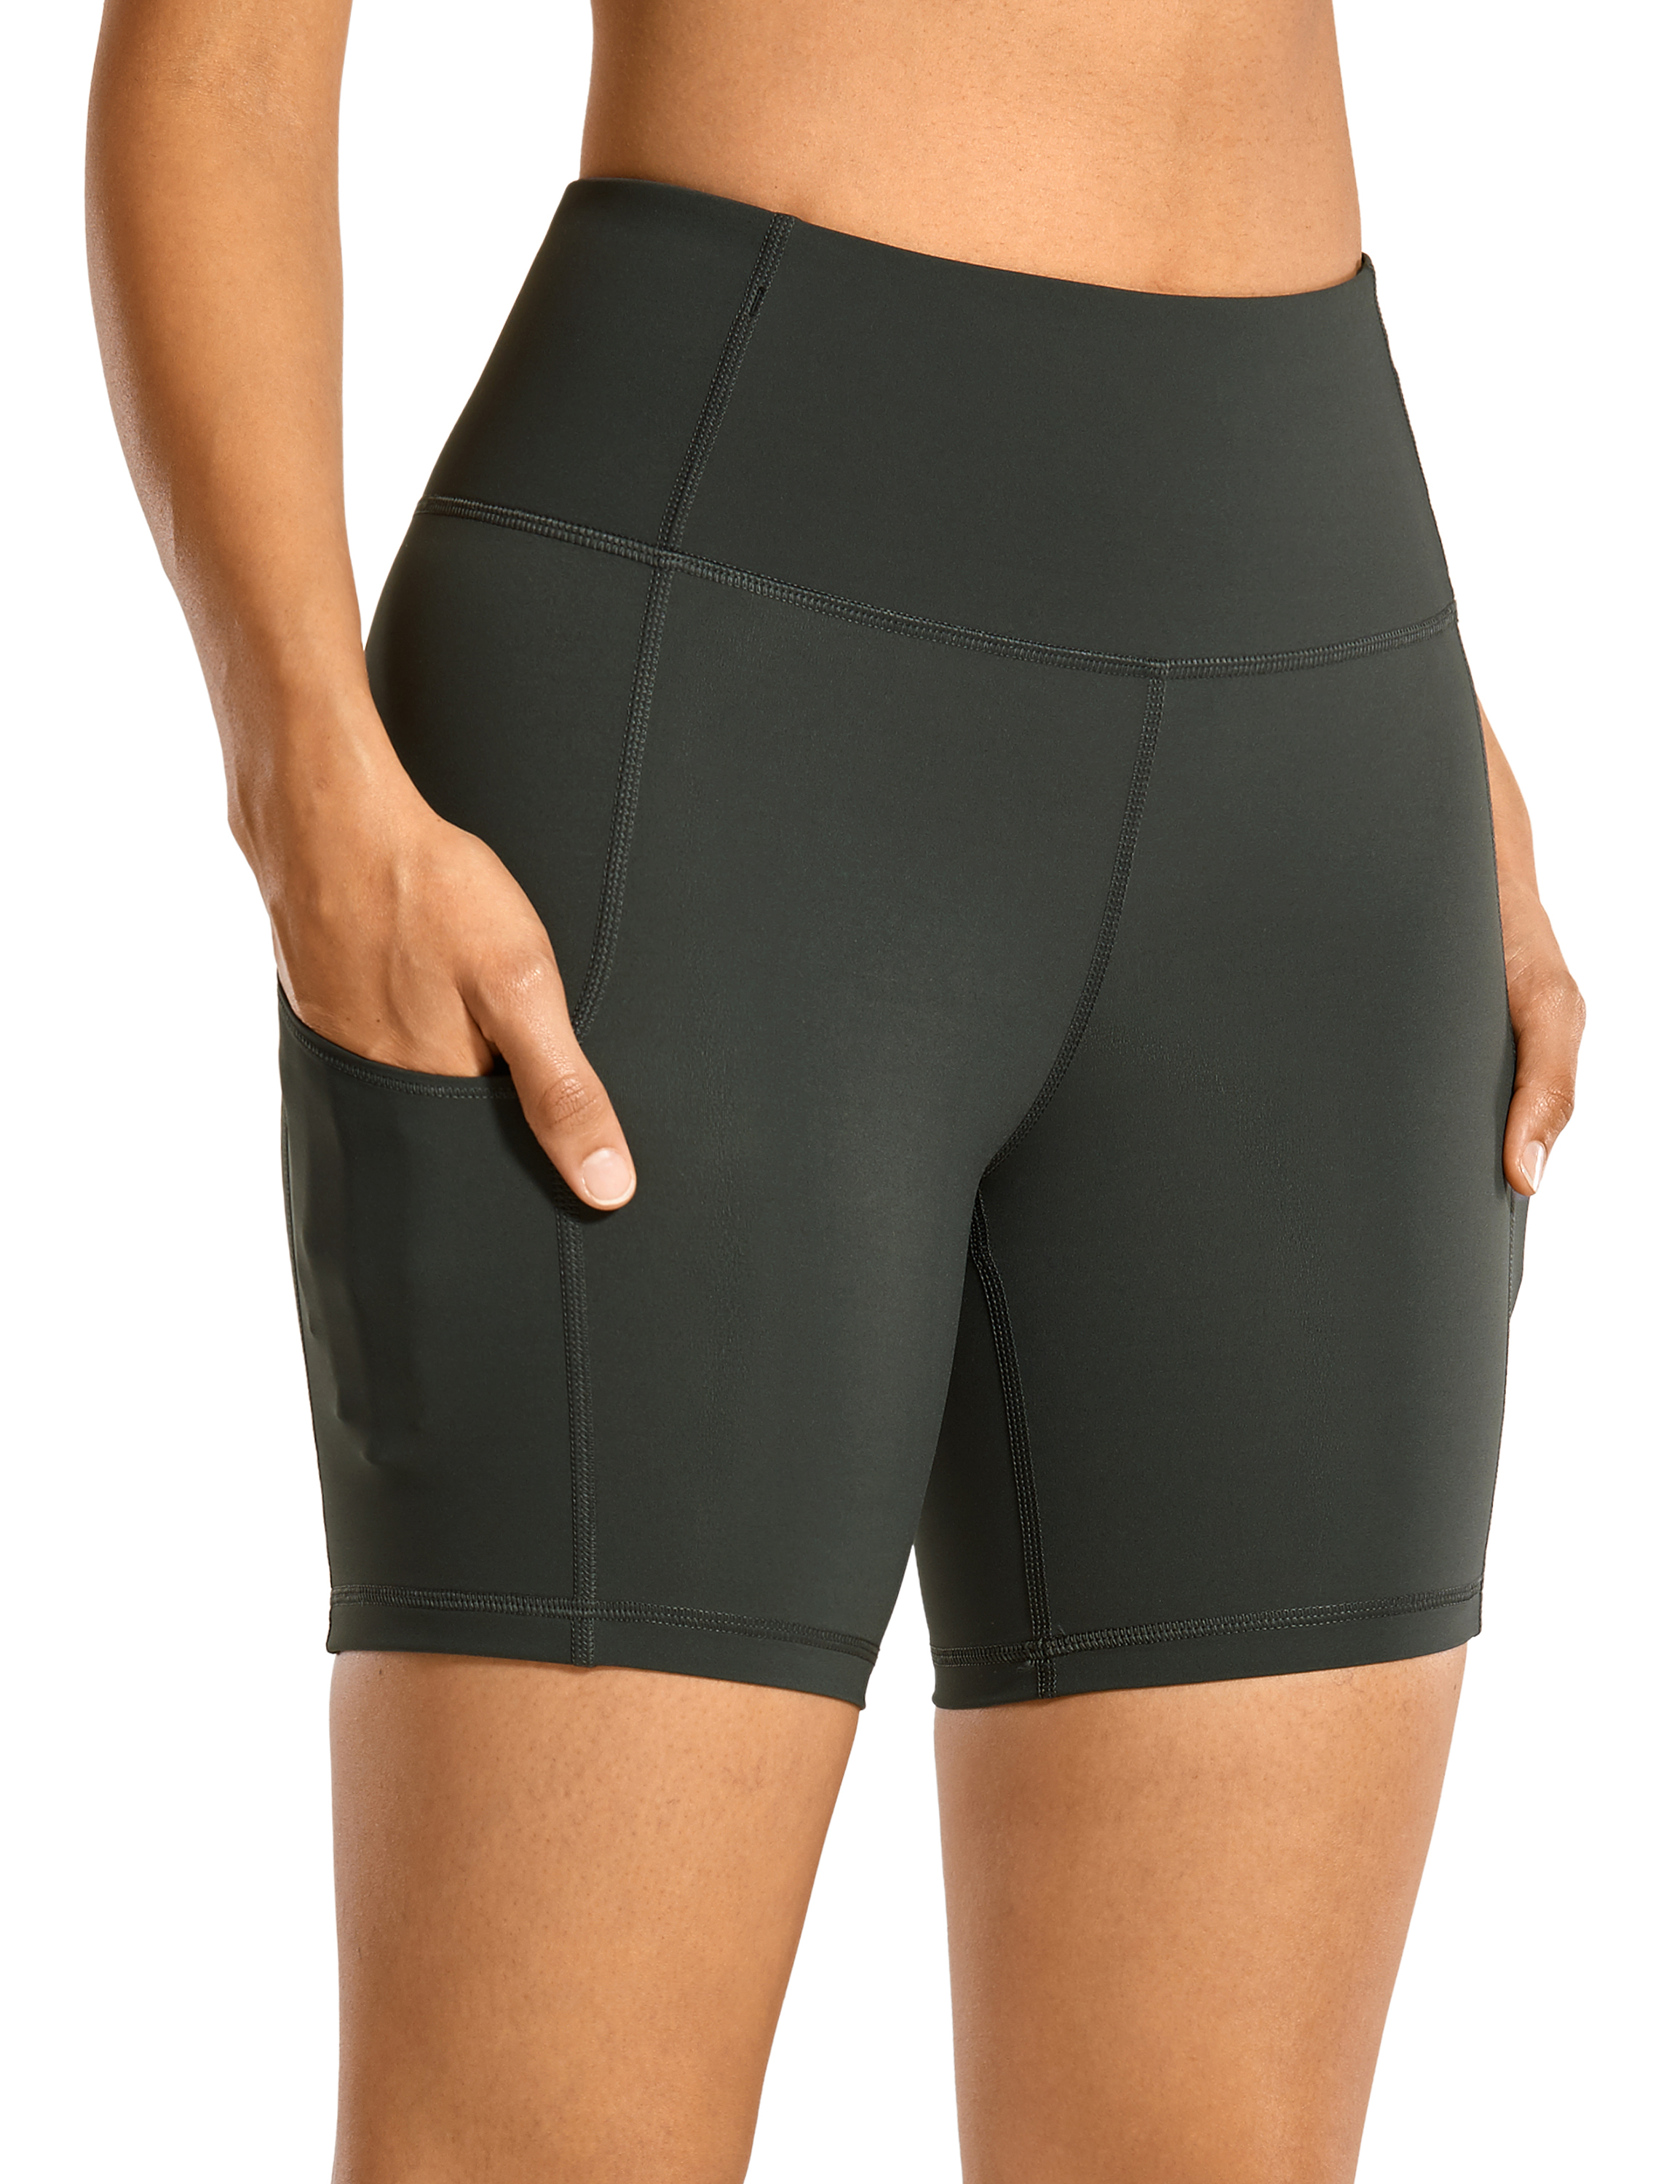 CRZ YOGA Womens Workout Shorts High Waist Yoga Biker Shorts Athletic Running Shorts with Pockets Naked Feeling 10 Inches 